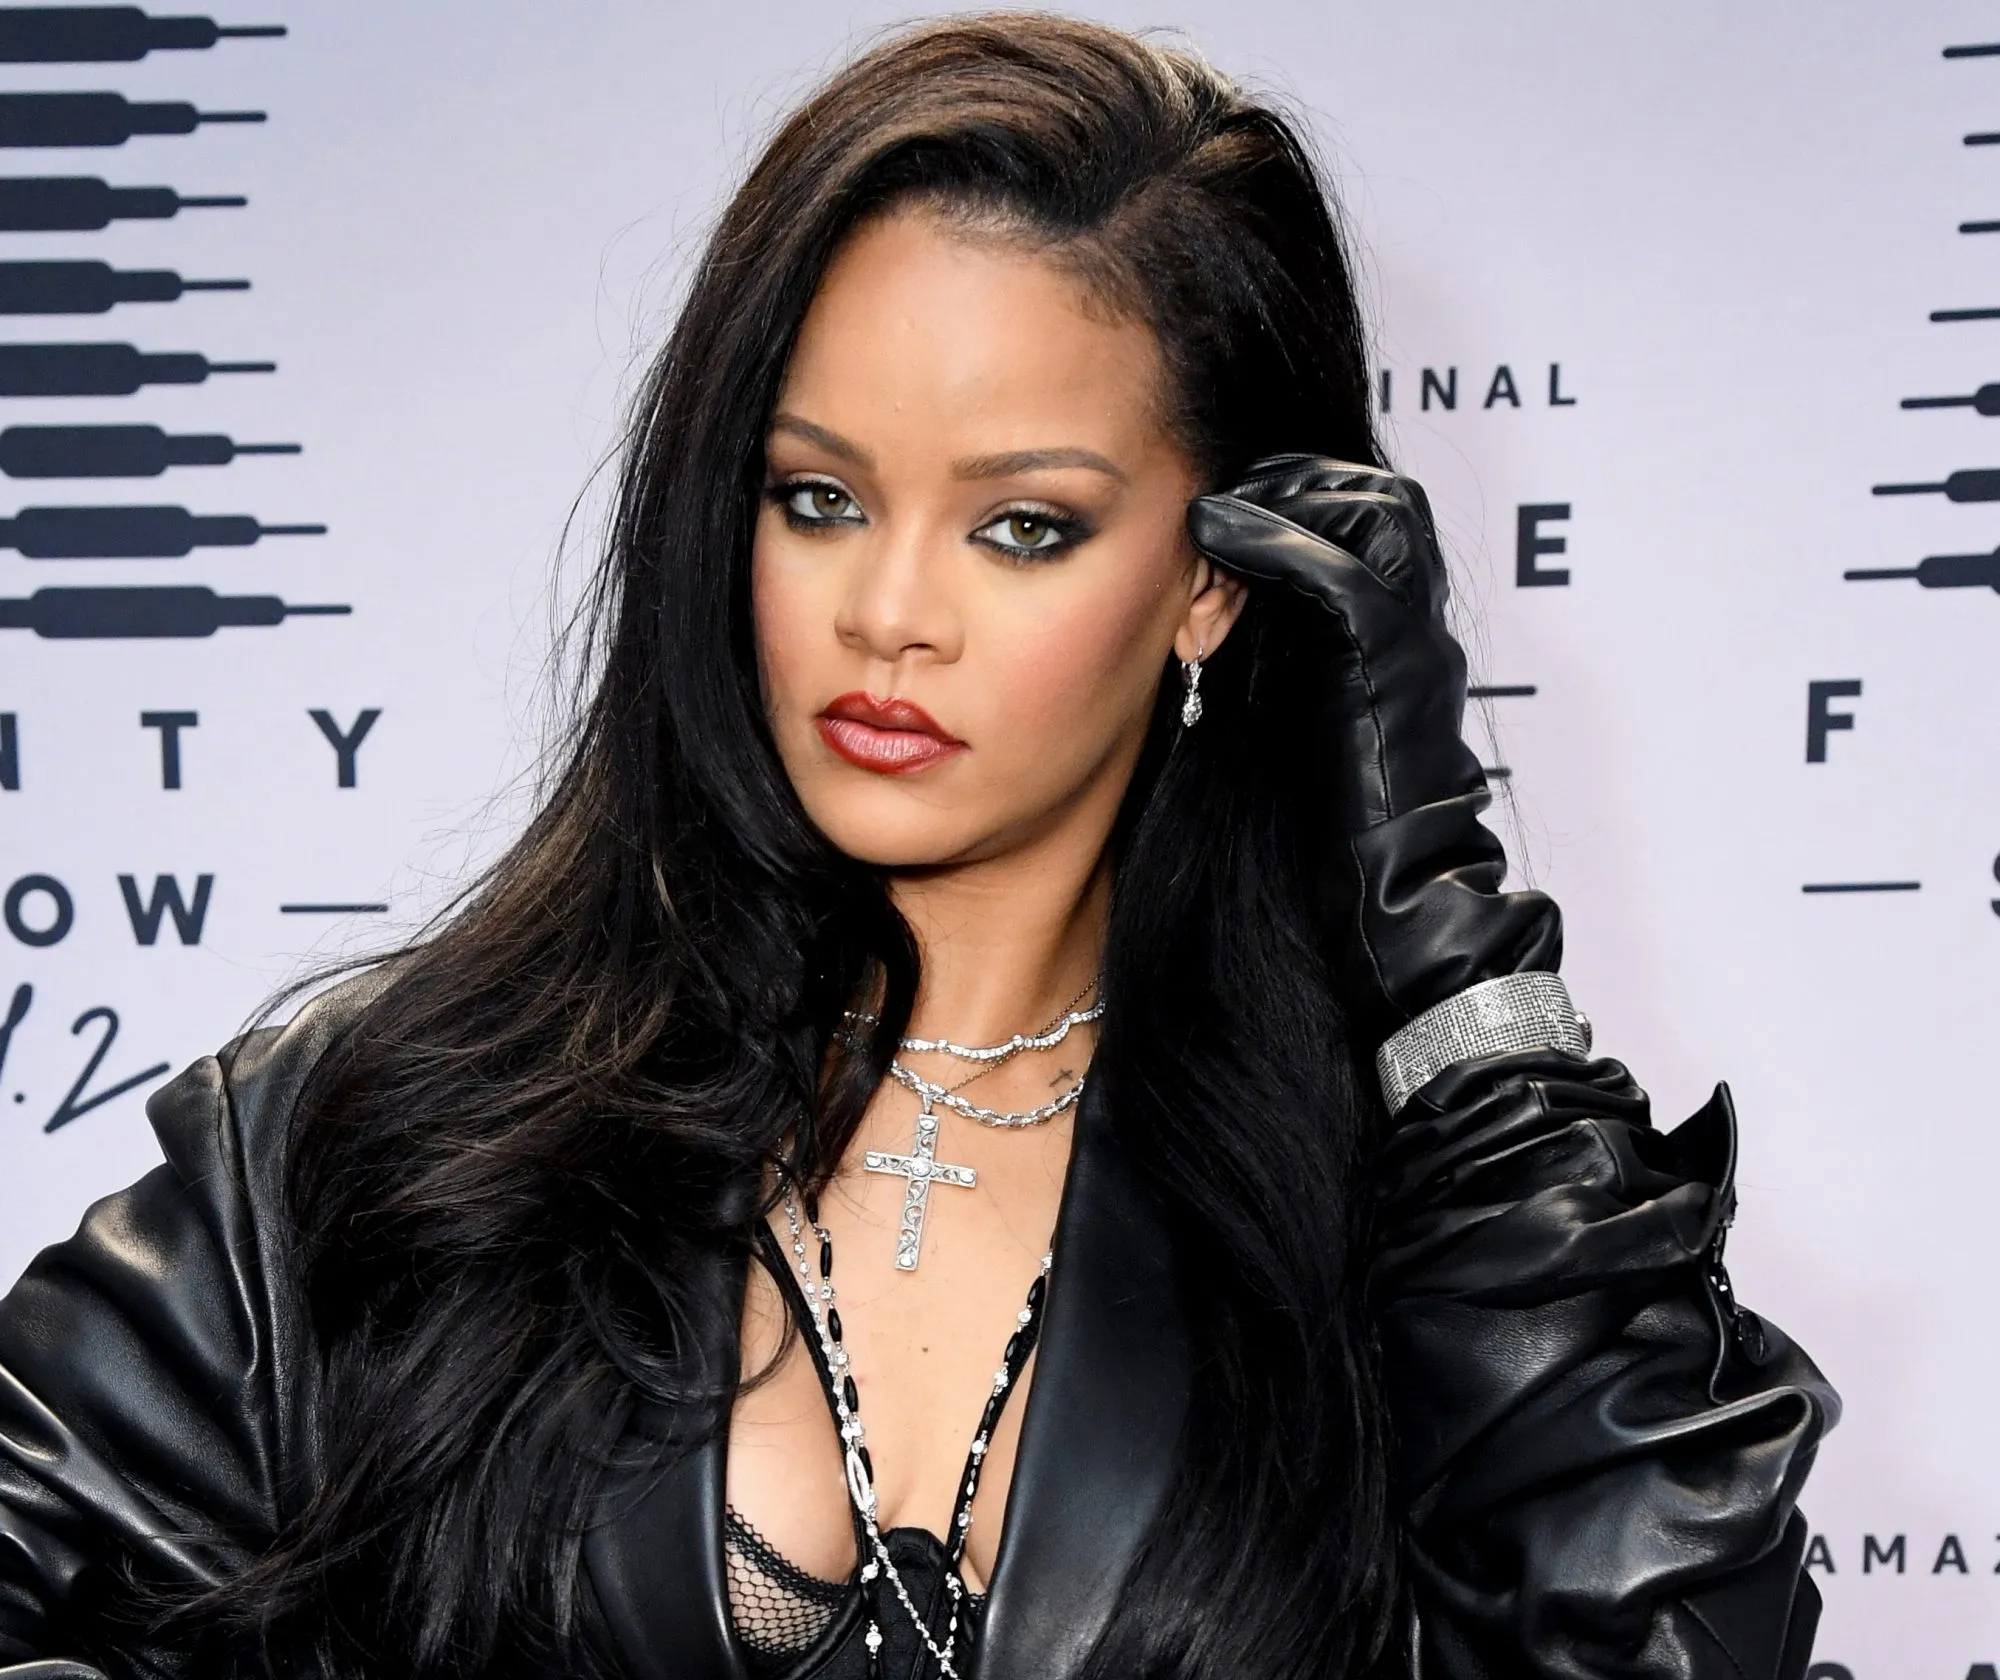 Now worth $1.7 billion, Rihanna is the richest female musician